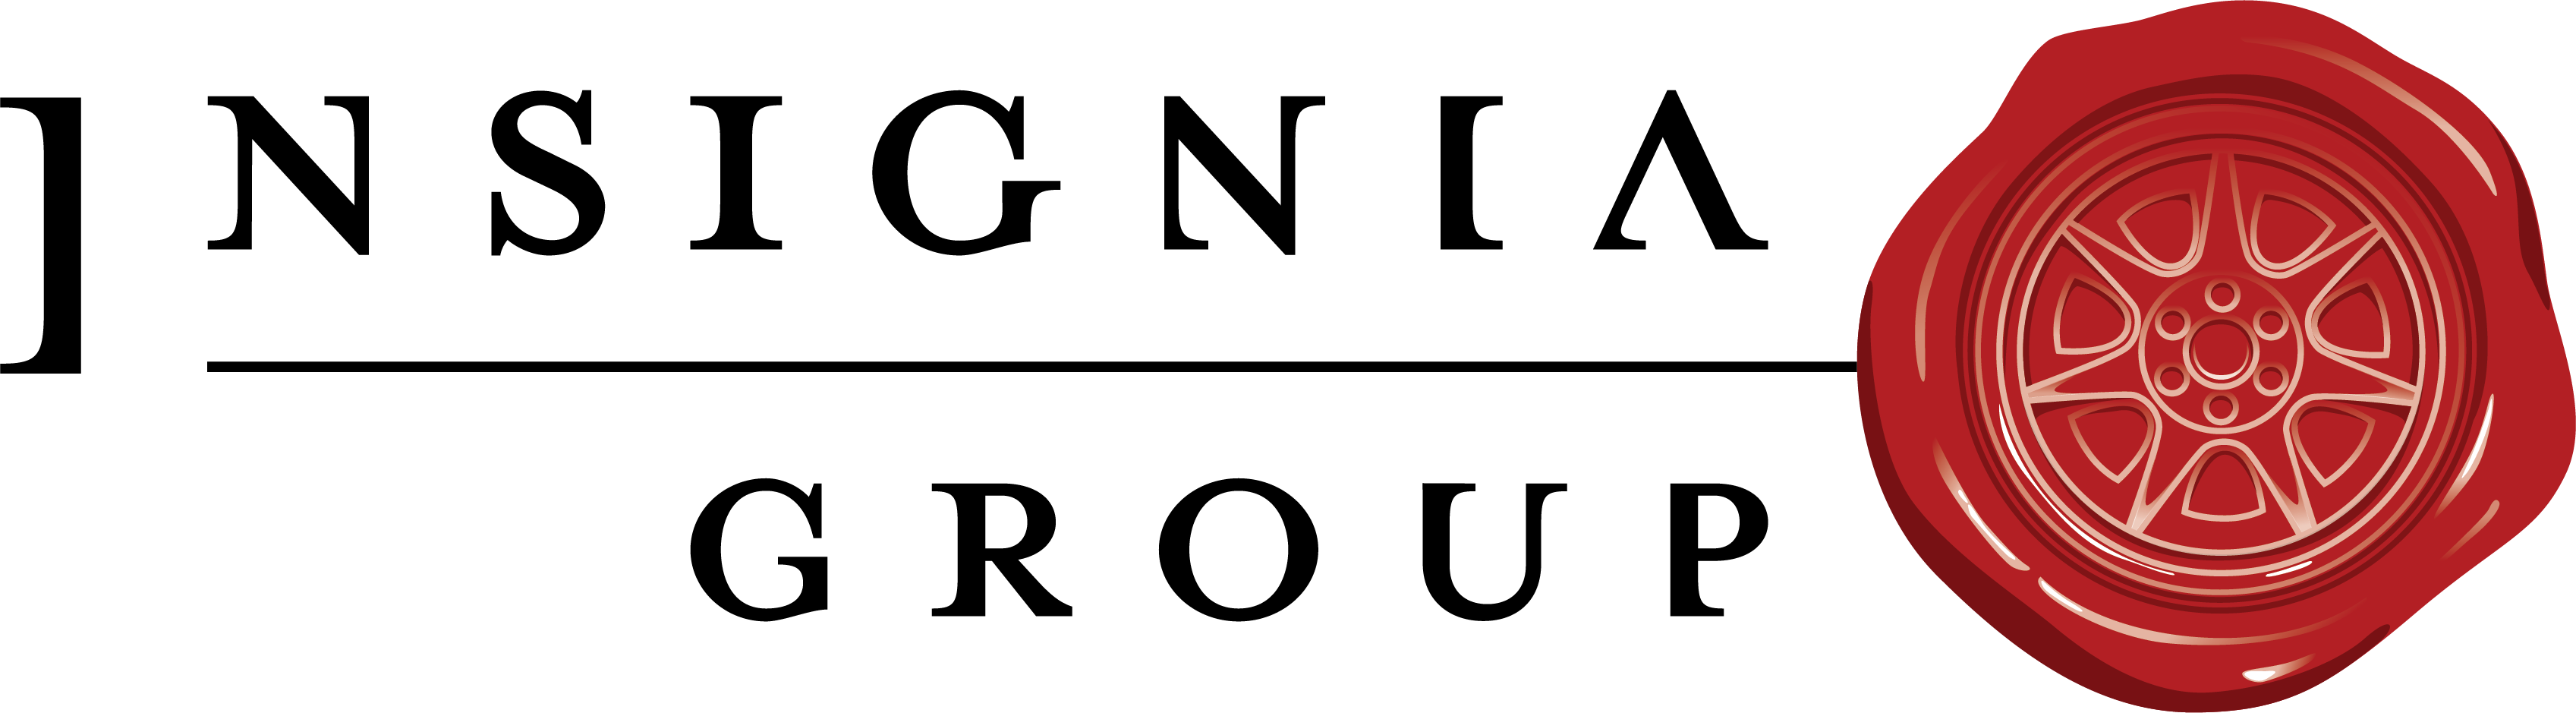 Insignia-logo.png